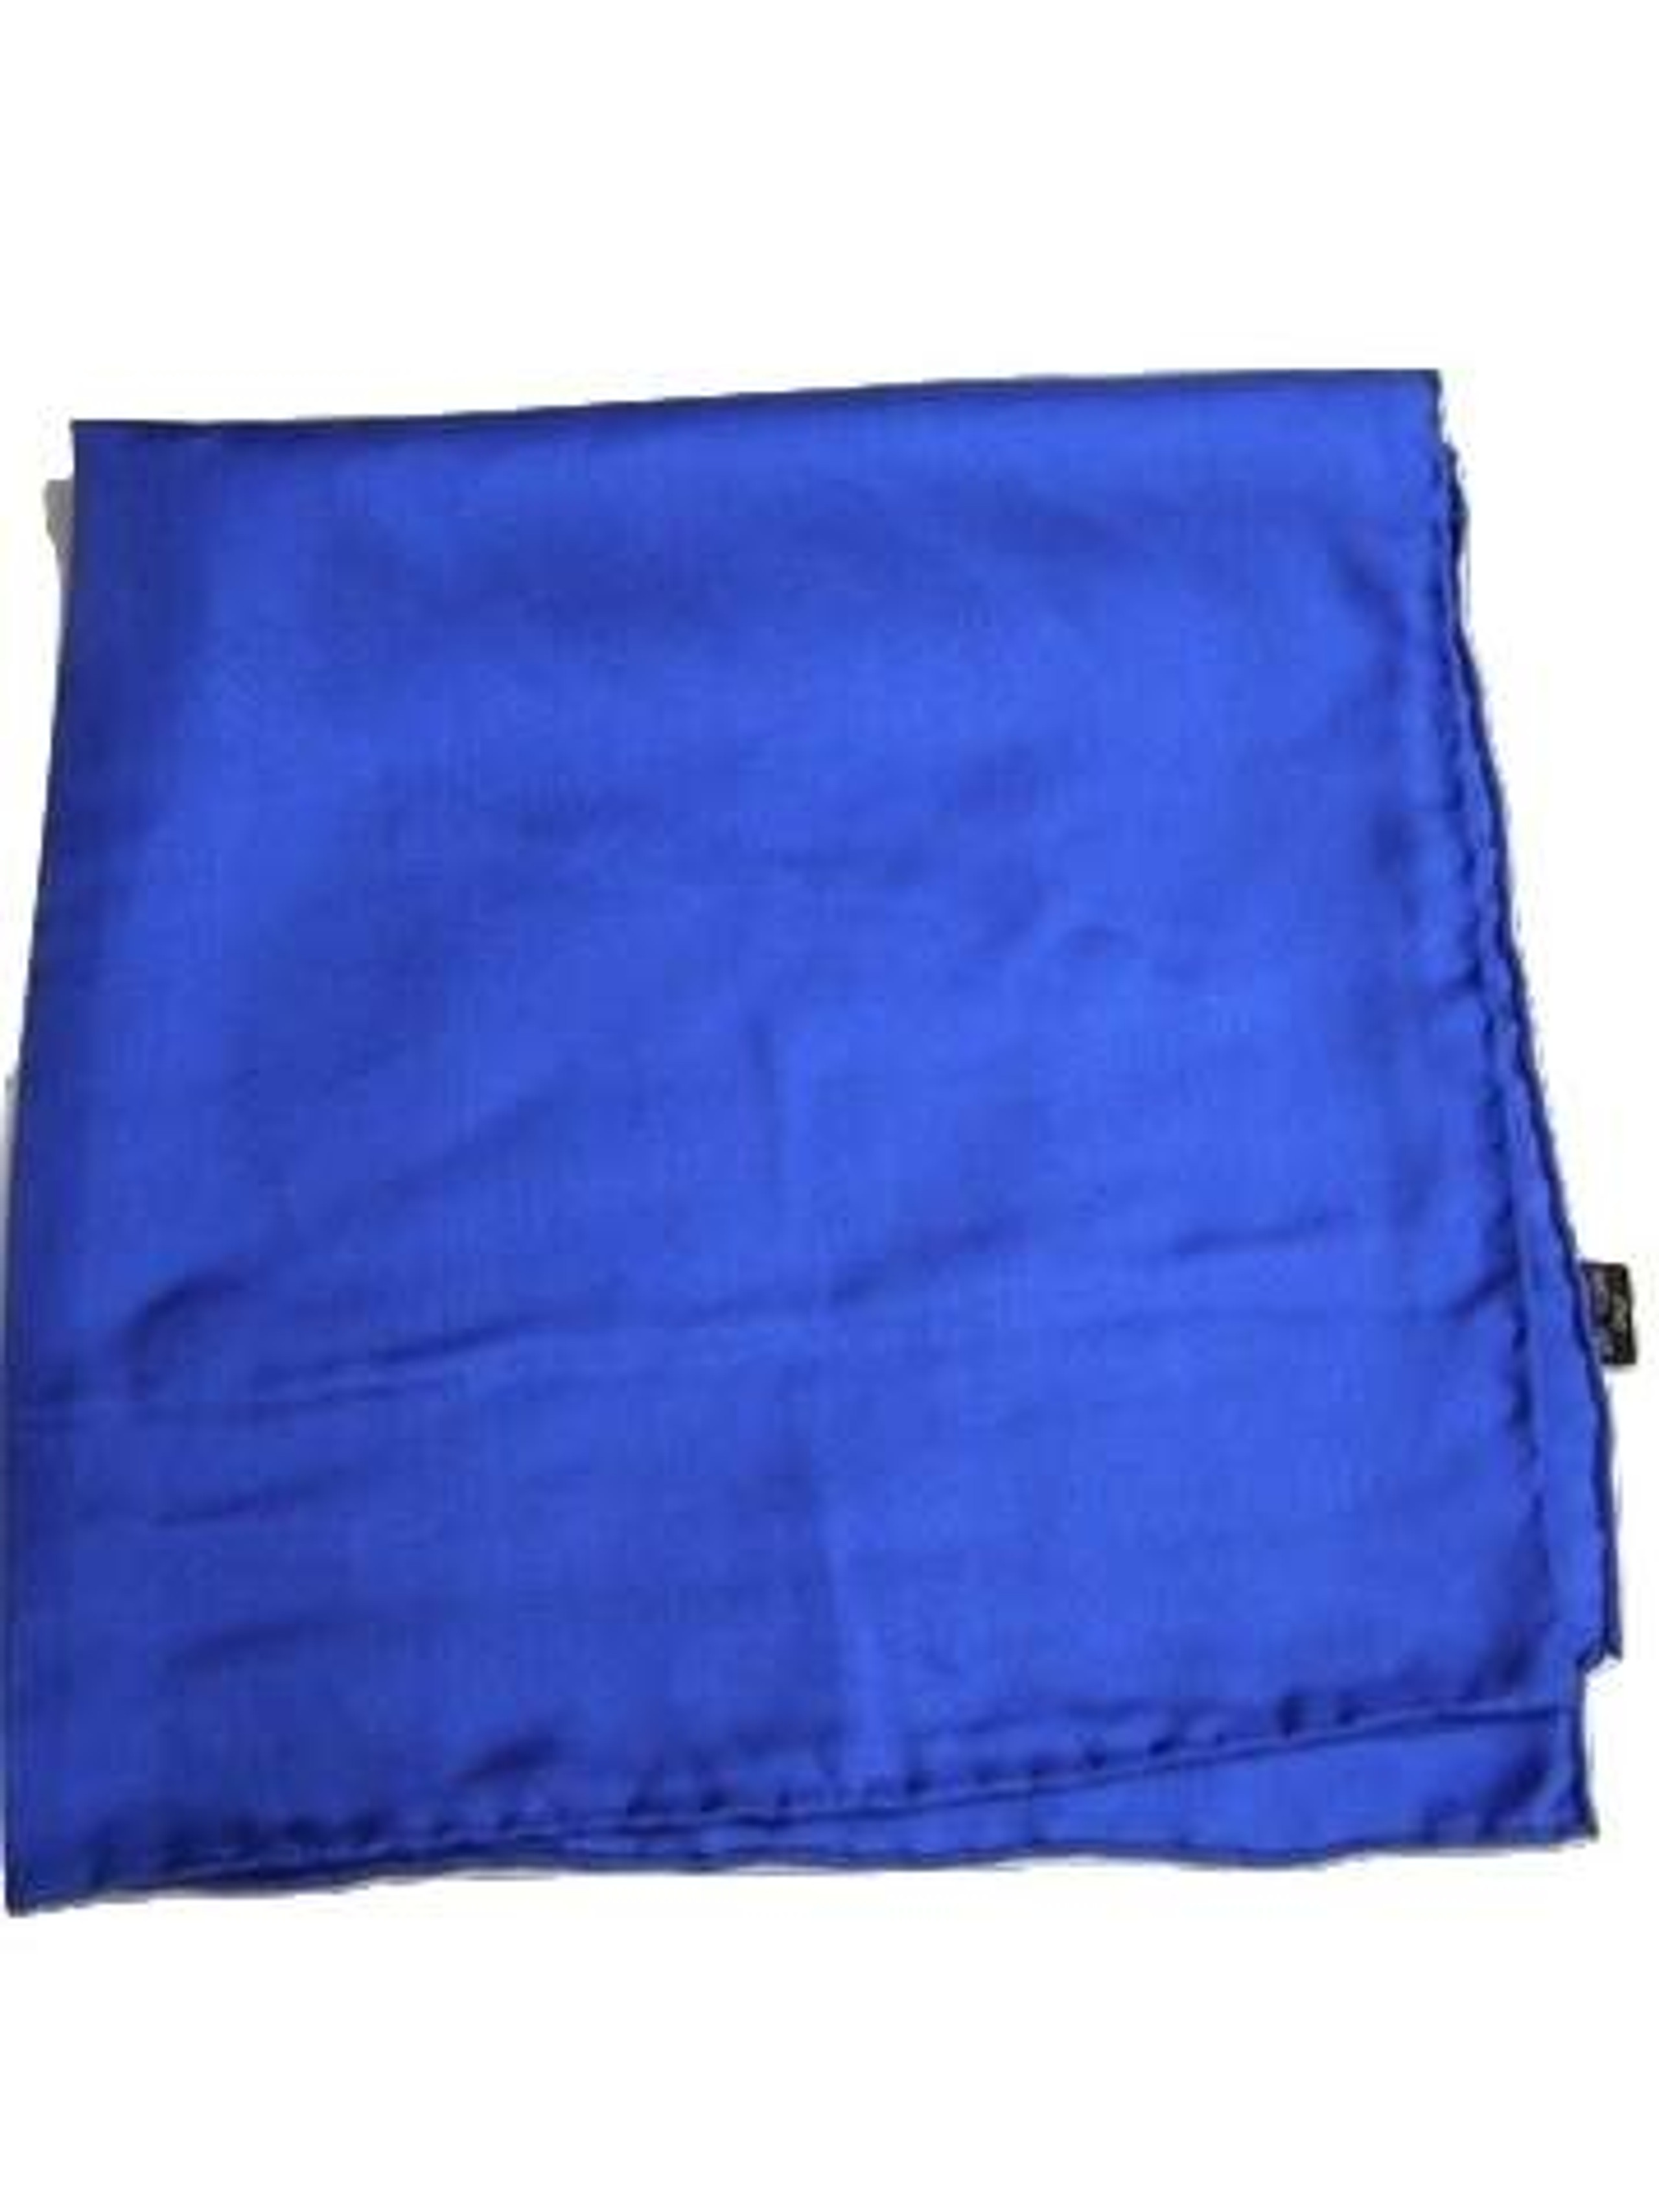 Men's Royal Blue Silk Handkerchief NEW - Tweedmans